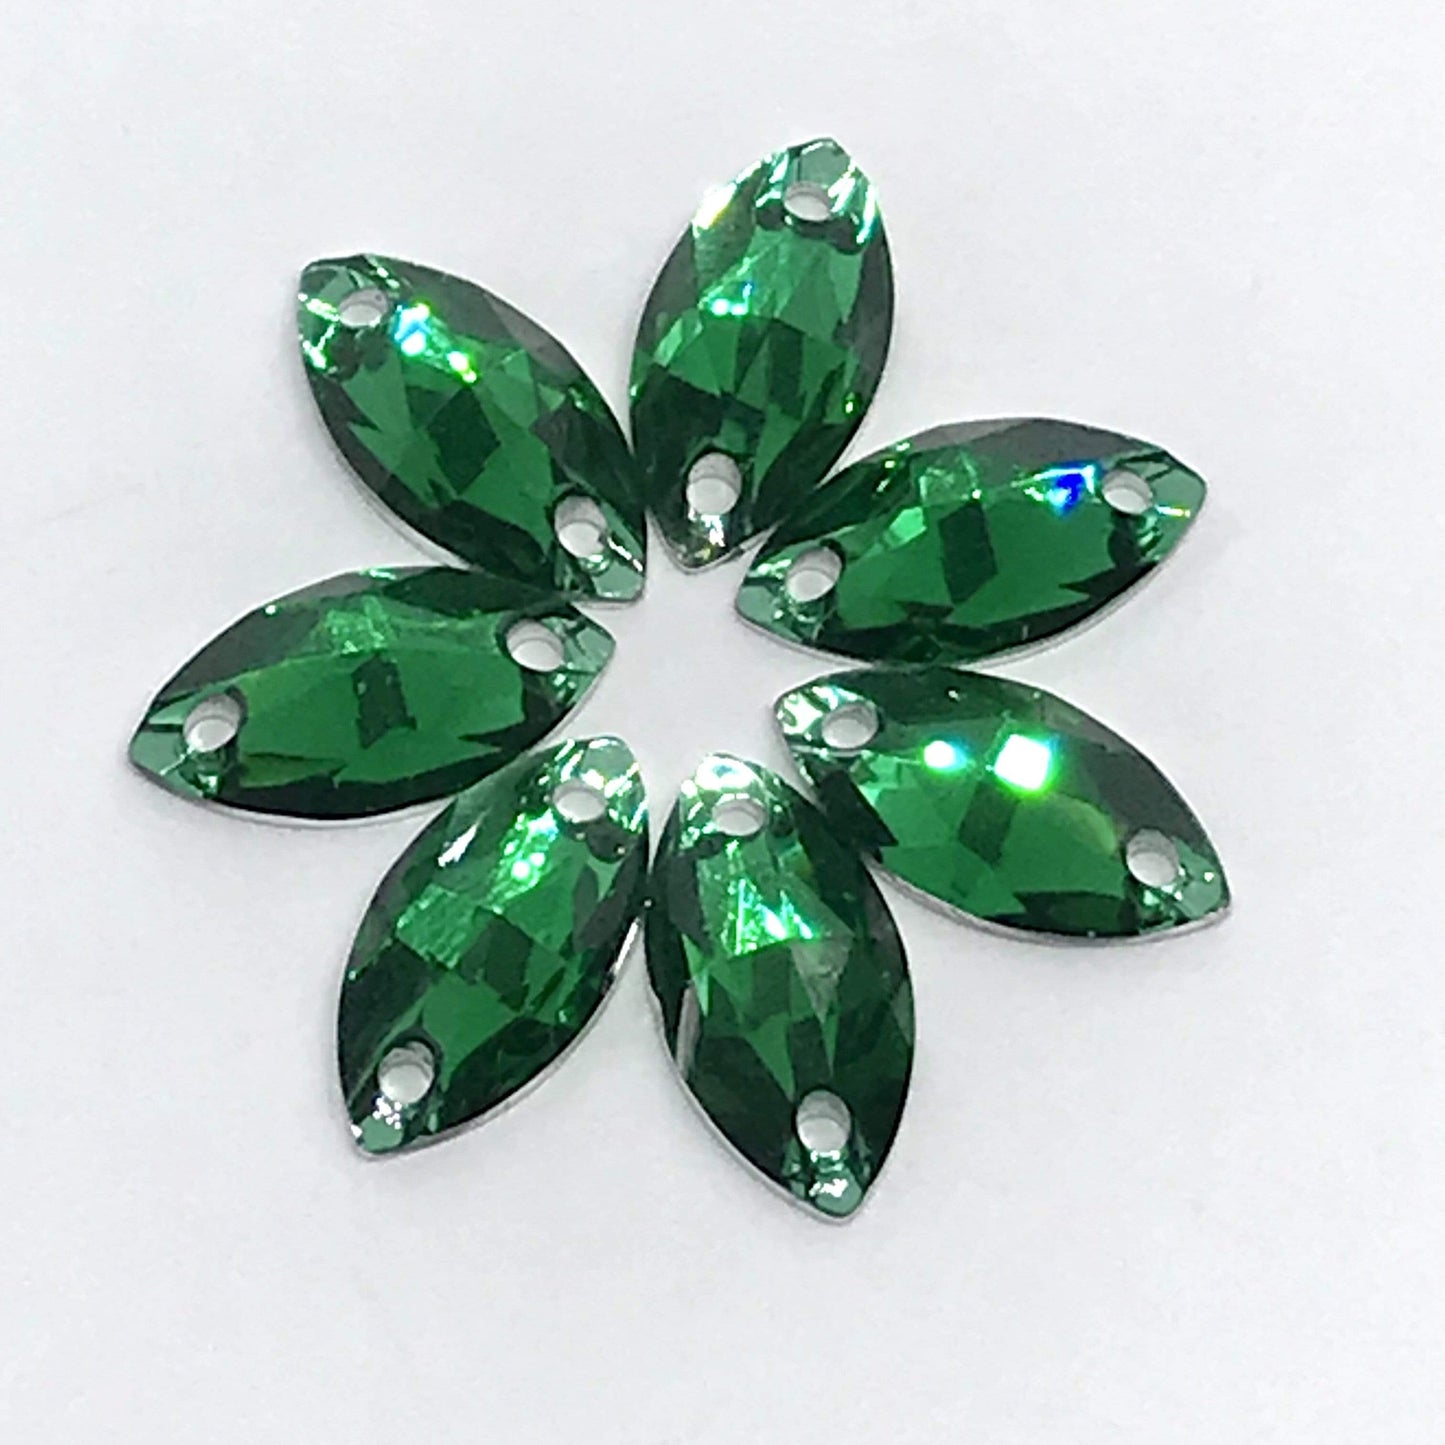 Sundaylace Creations & Bling Resin Gems Green 7*12mm Mini Navette Resin Gem, sew on (Sold in sets of 12 gems)